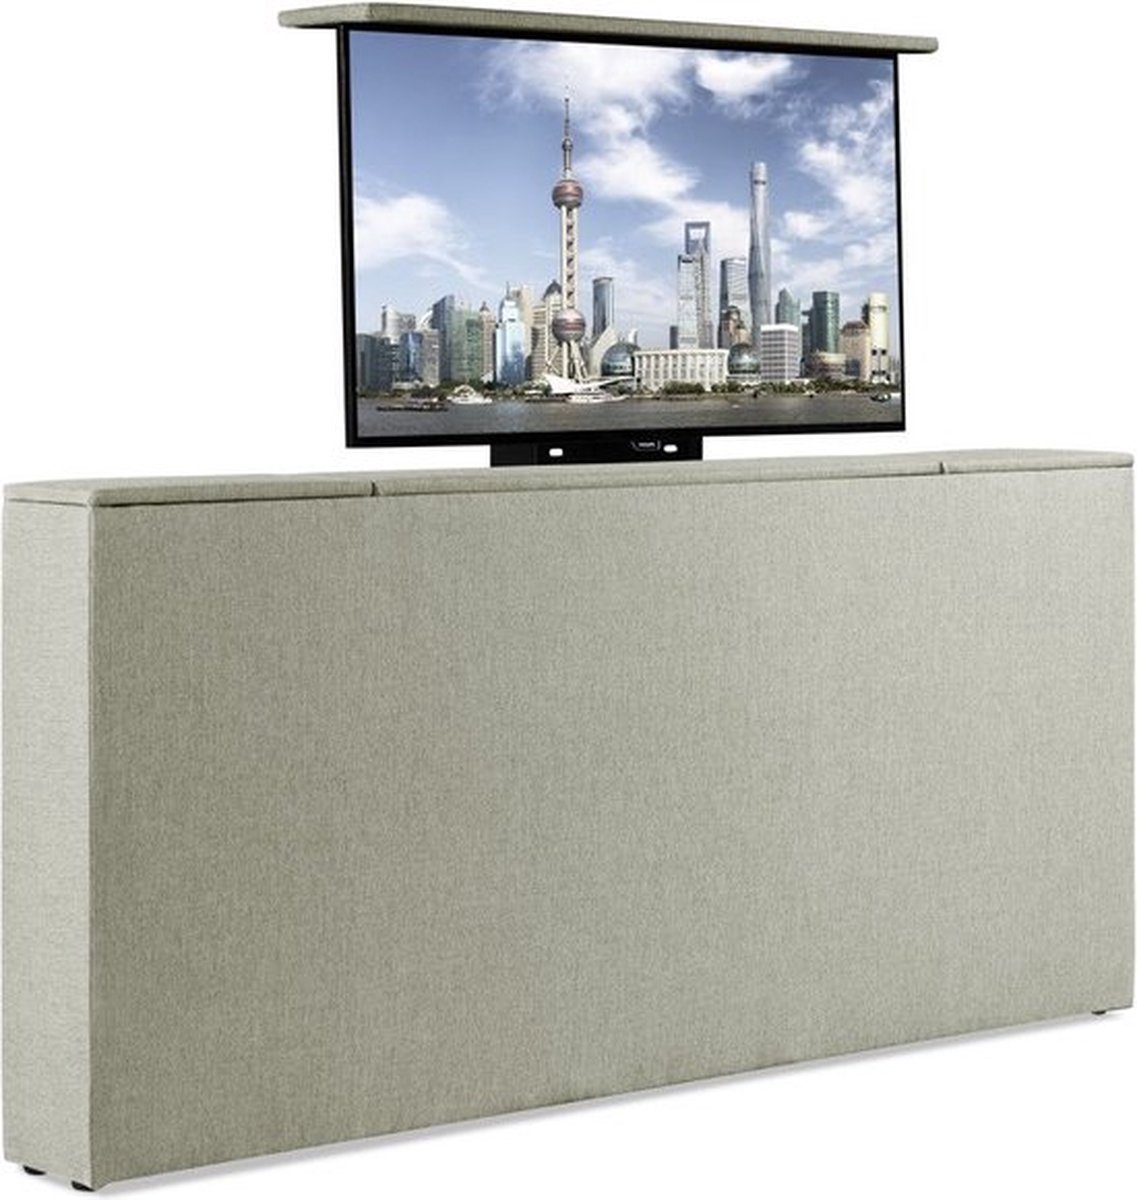 Bedonderdeel - BedNL TV-Lift Systeem in Voetbord - Max. 42 inch TV - 200 breed 85 Hoog 22 Breed- Groen Stof